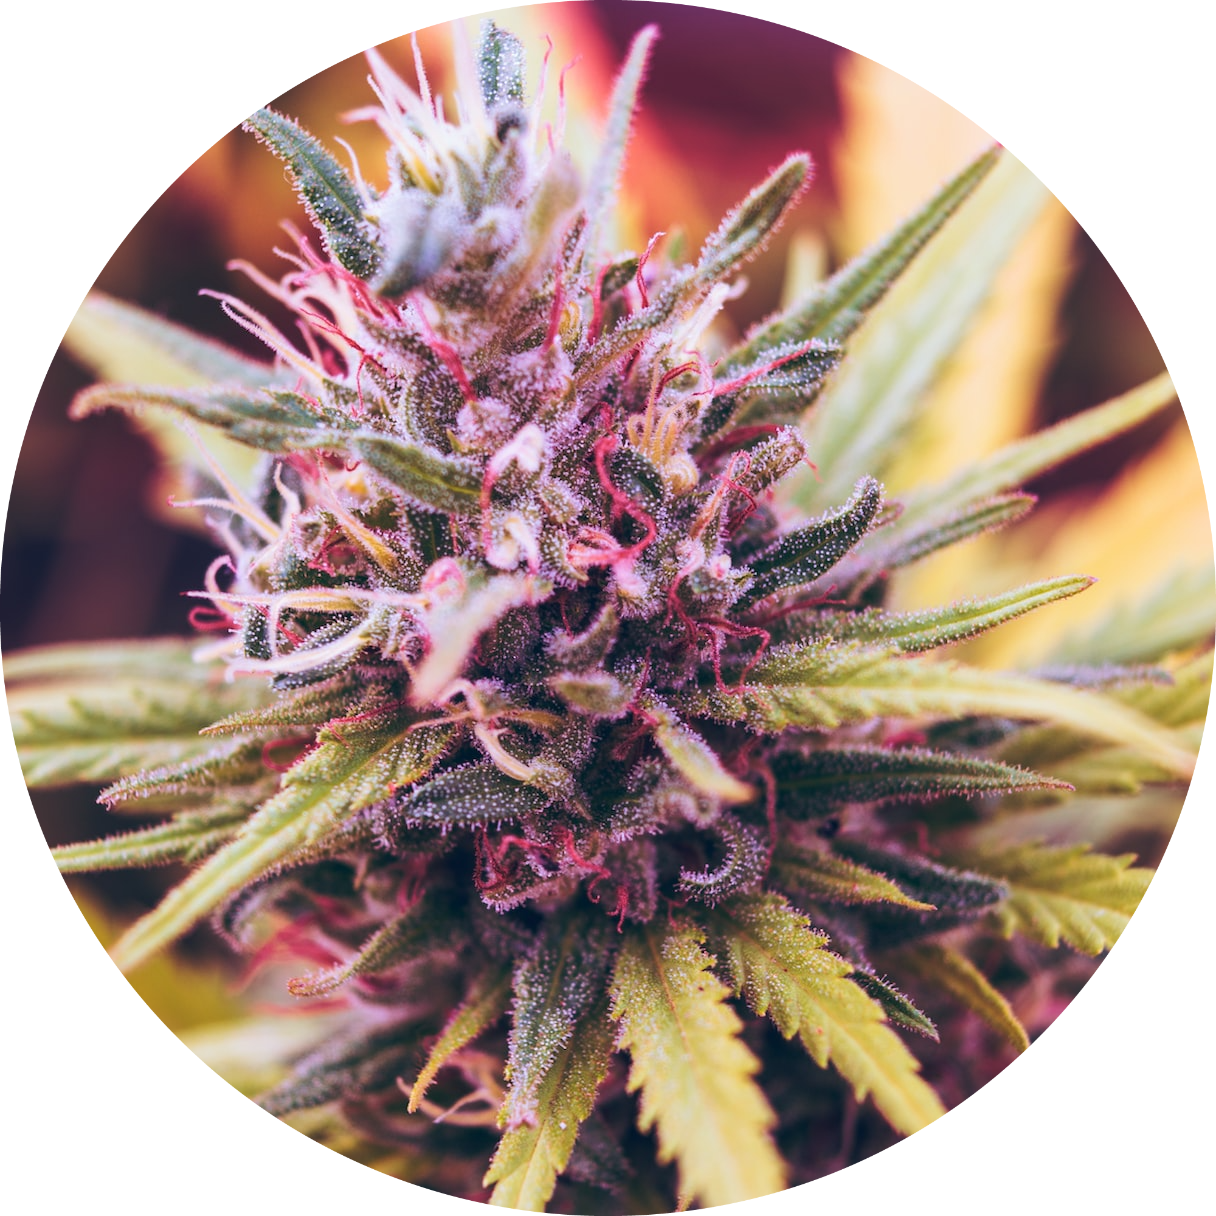 Cannabis flower